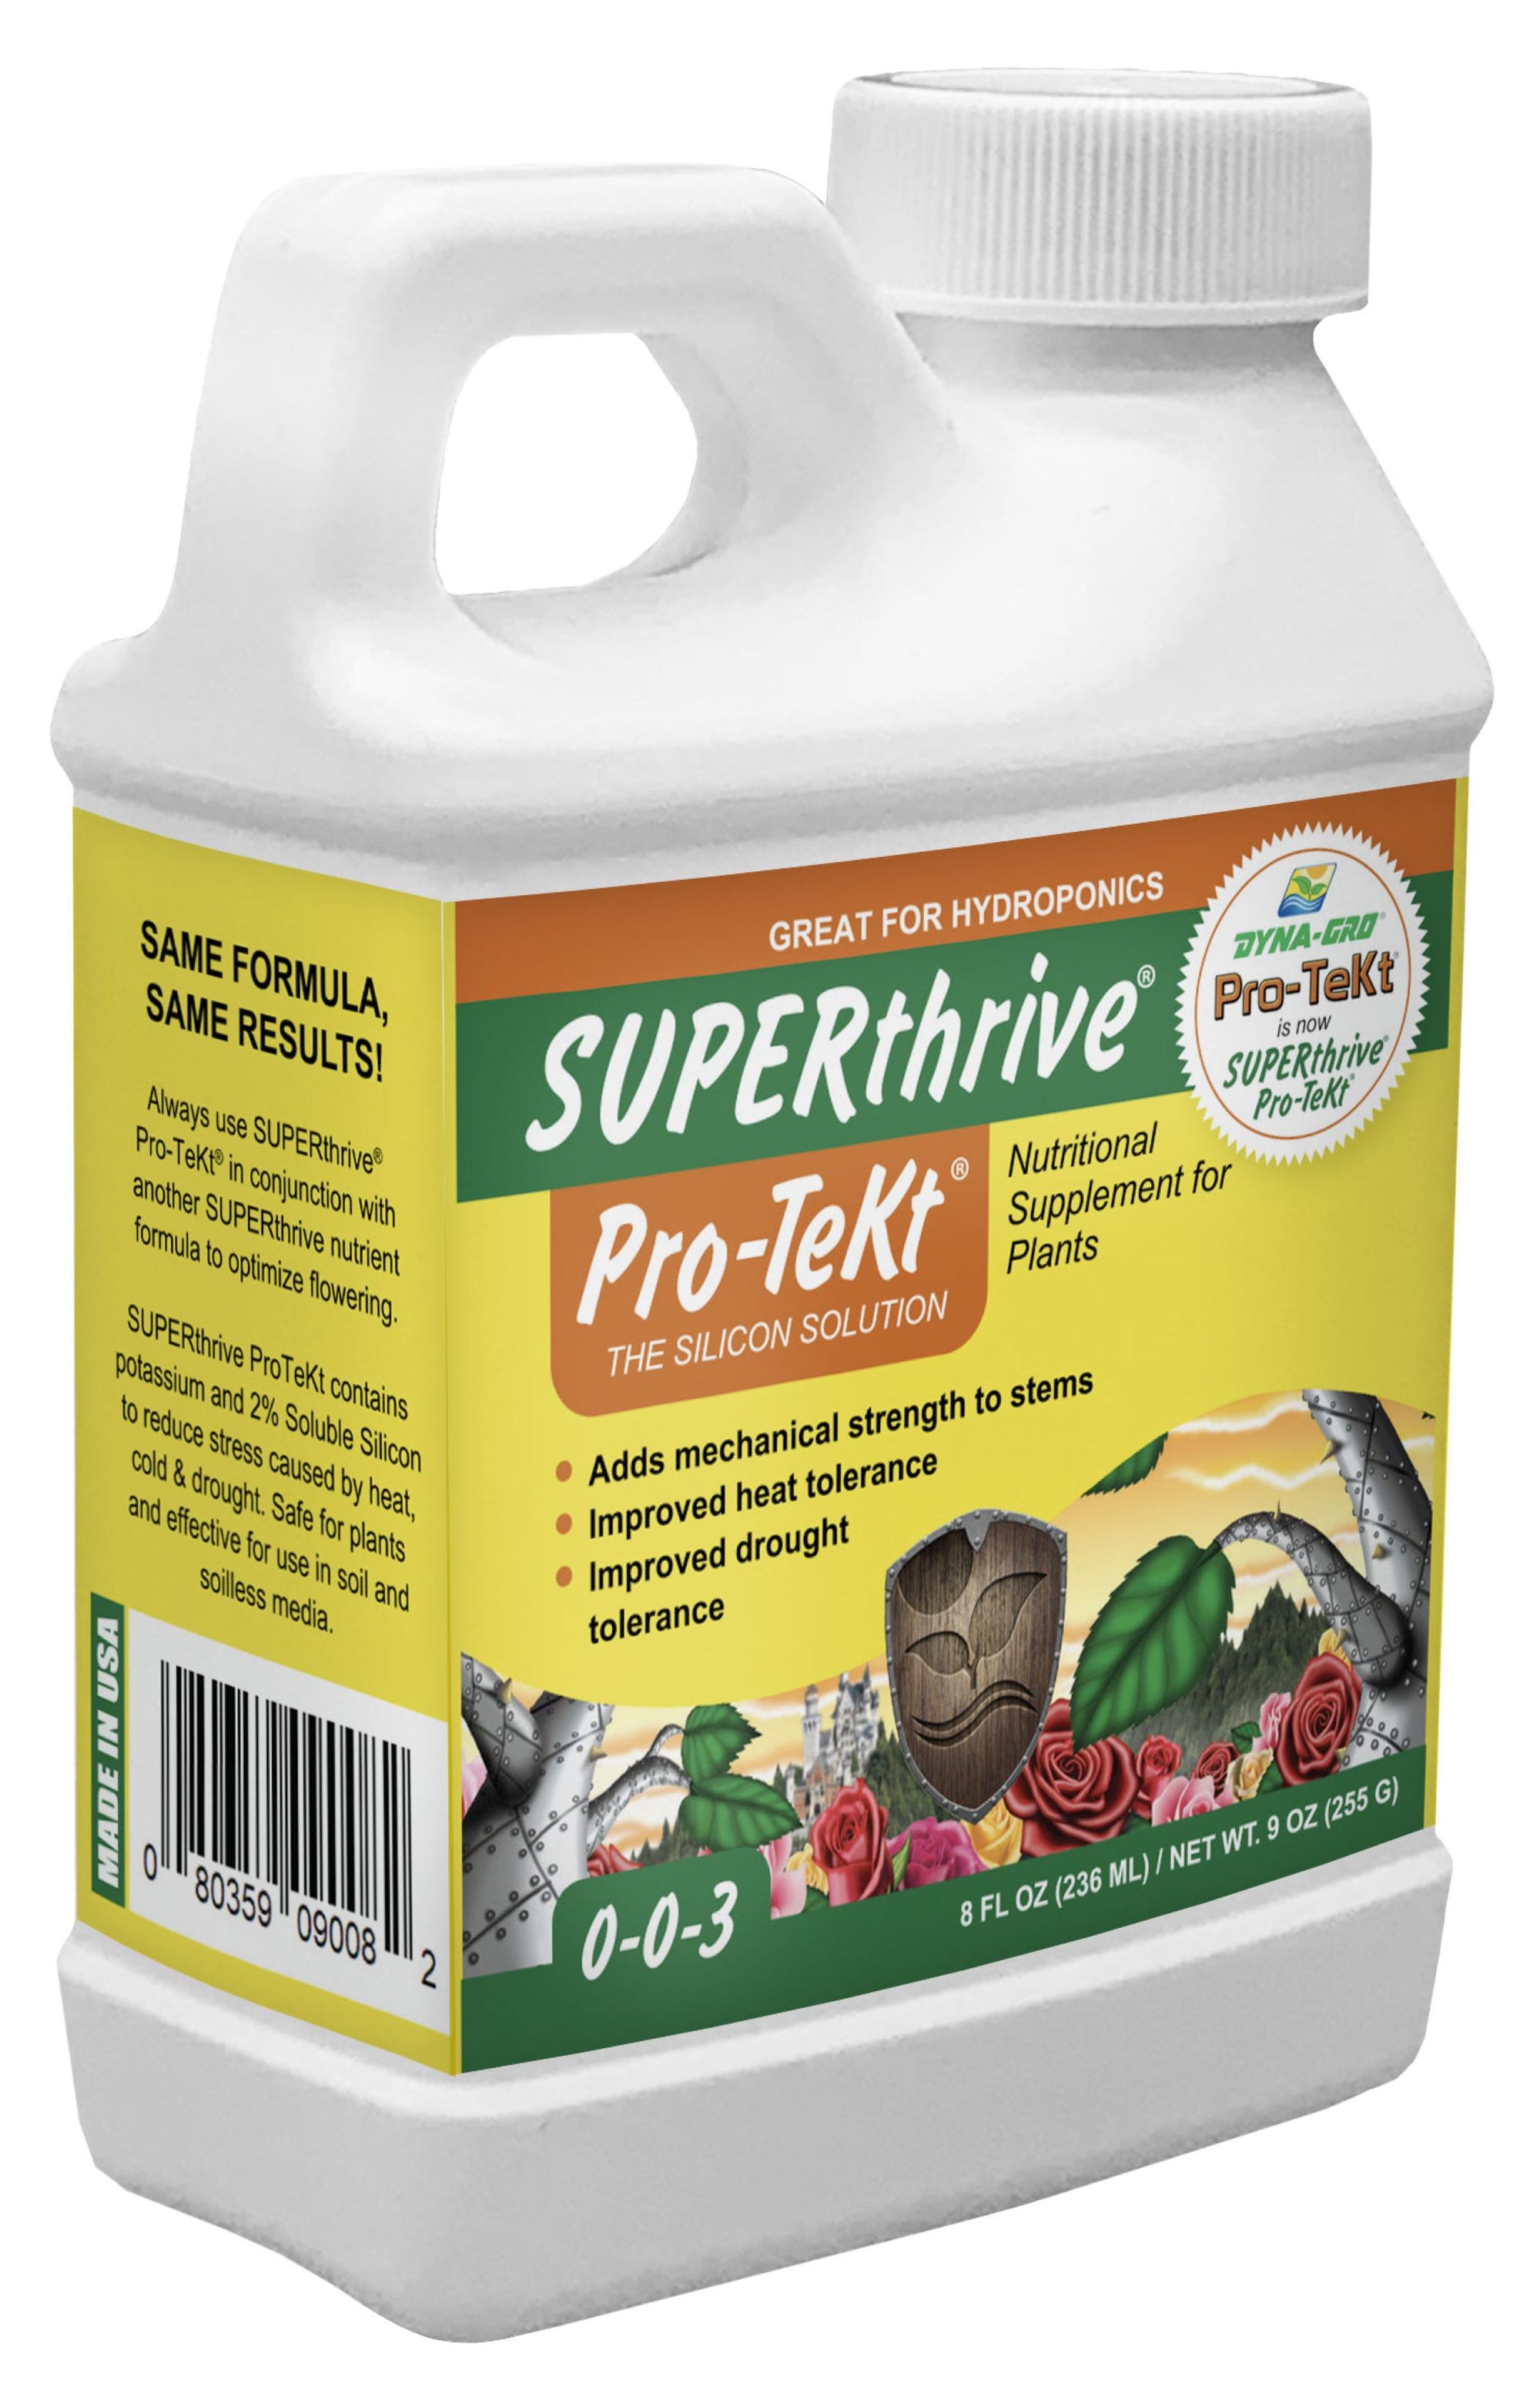 SUPERthrive Pro-Tekt Silicon Supplement